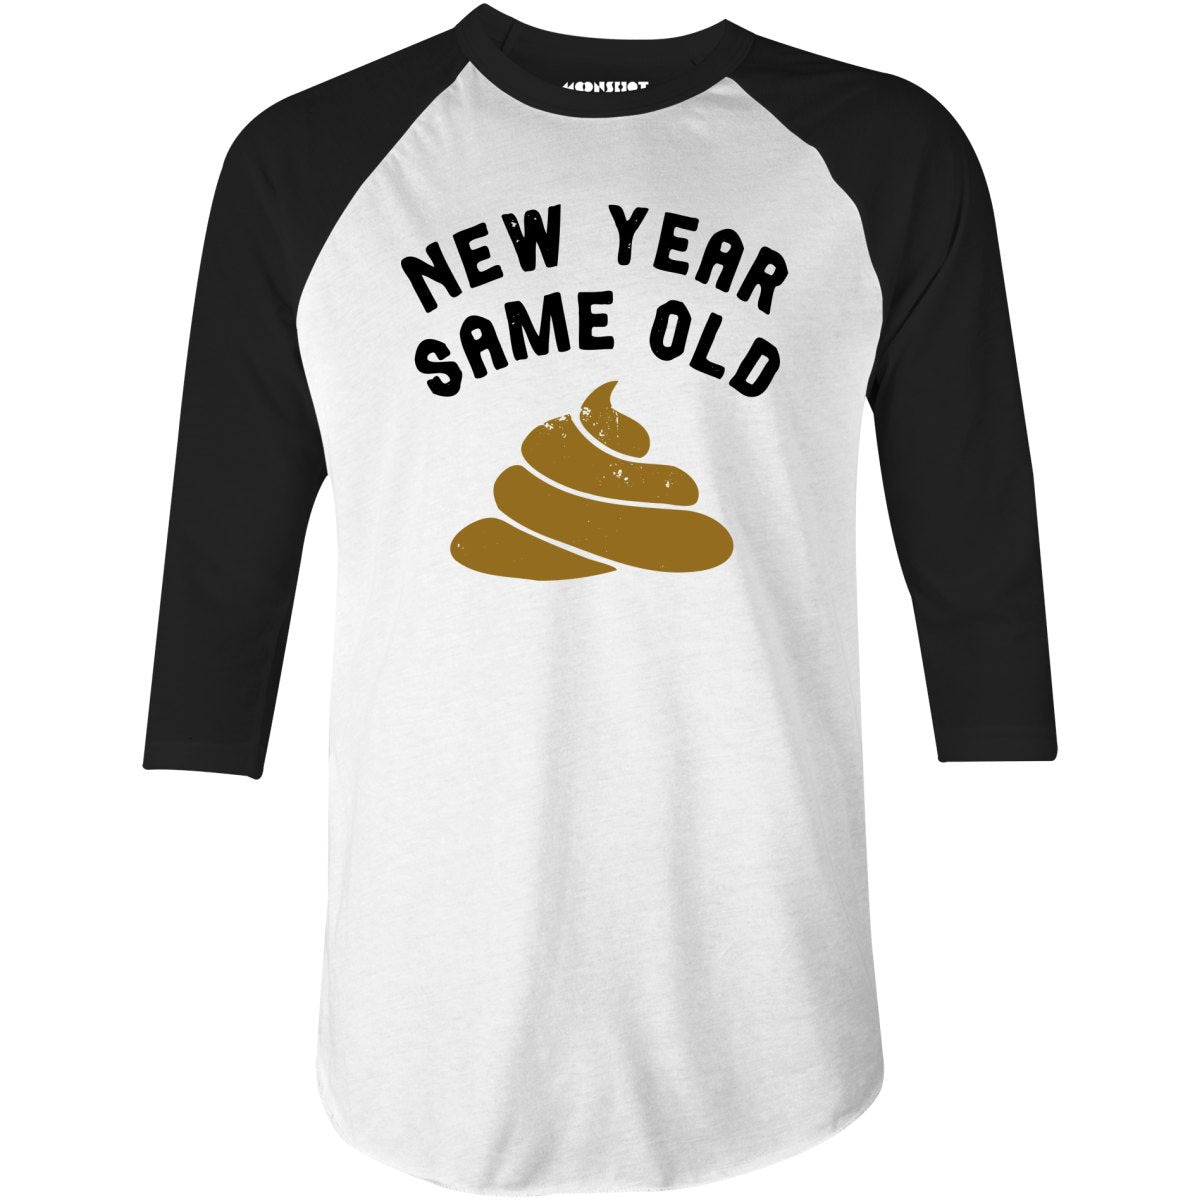 New Year Same Old - 3/4 Sleeve Raglan T-Shirt